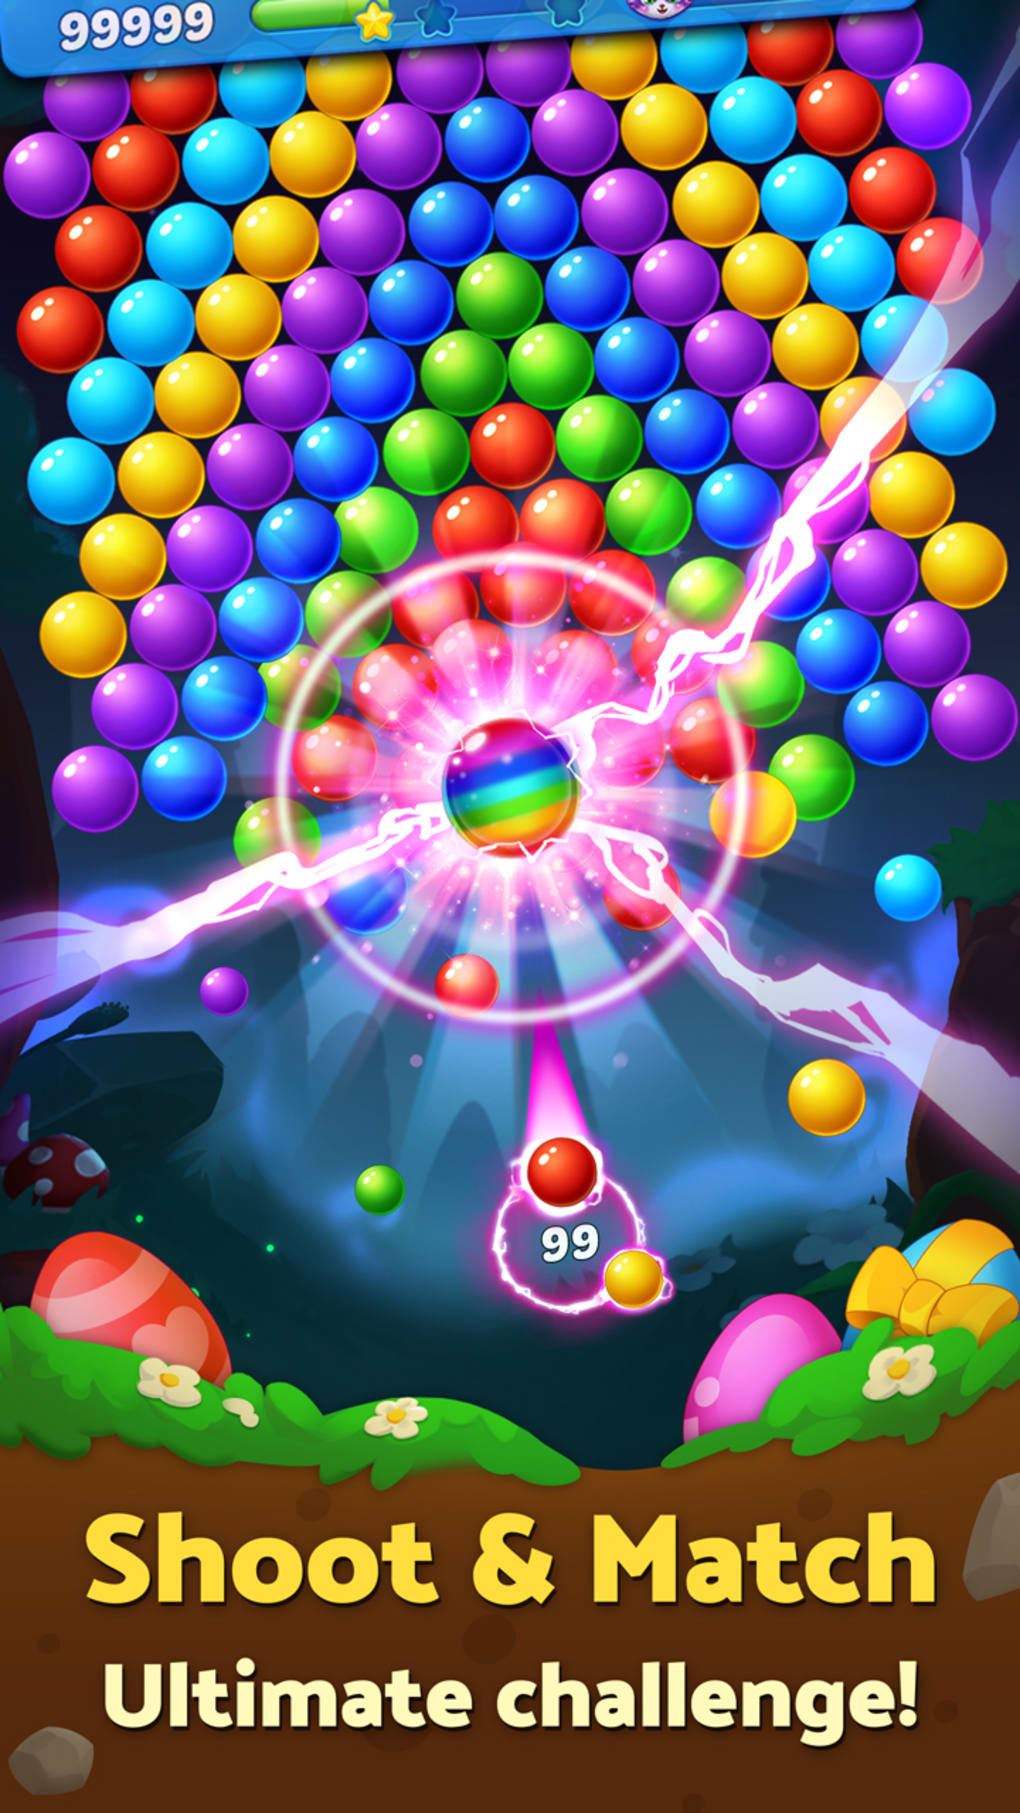 Jogo Bubble Shooter Max versão móvel andróide iOS apk baixar